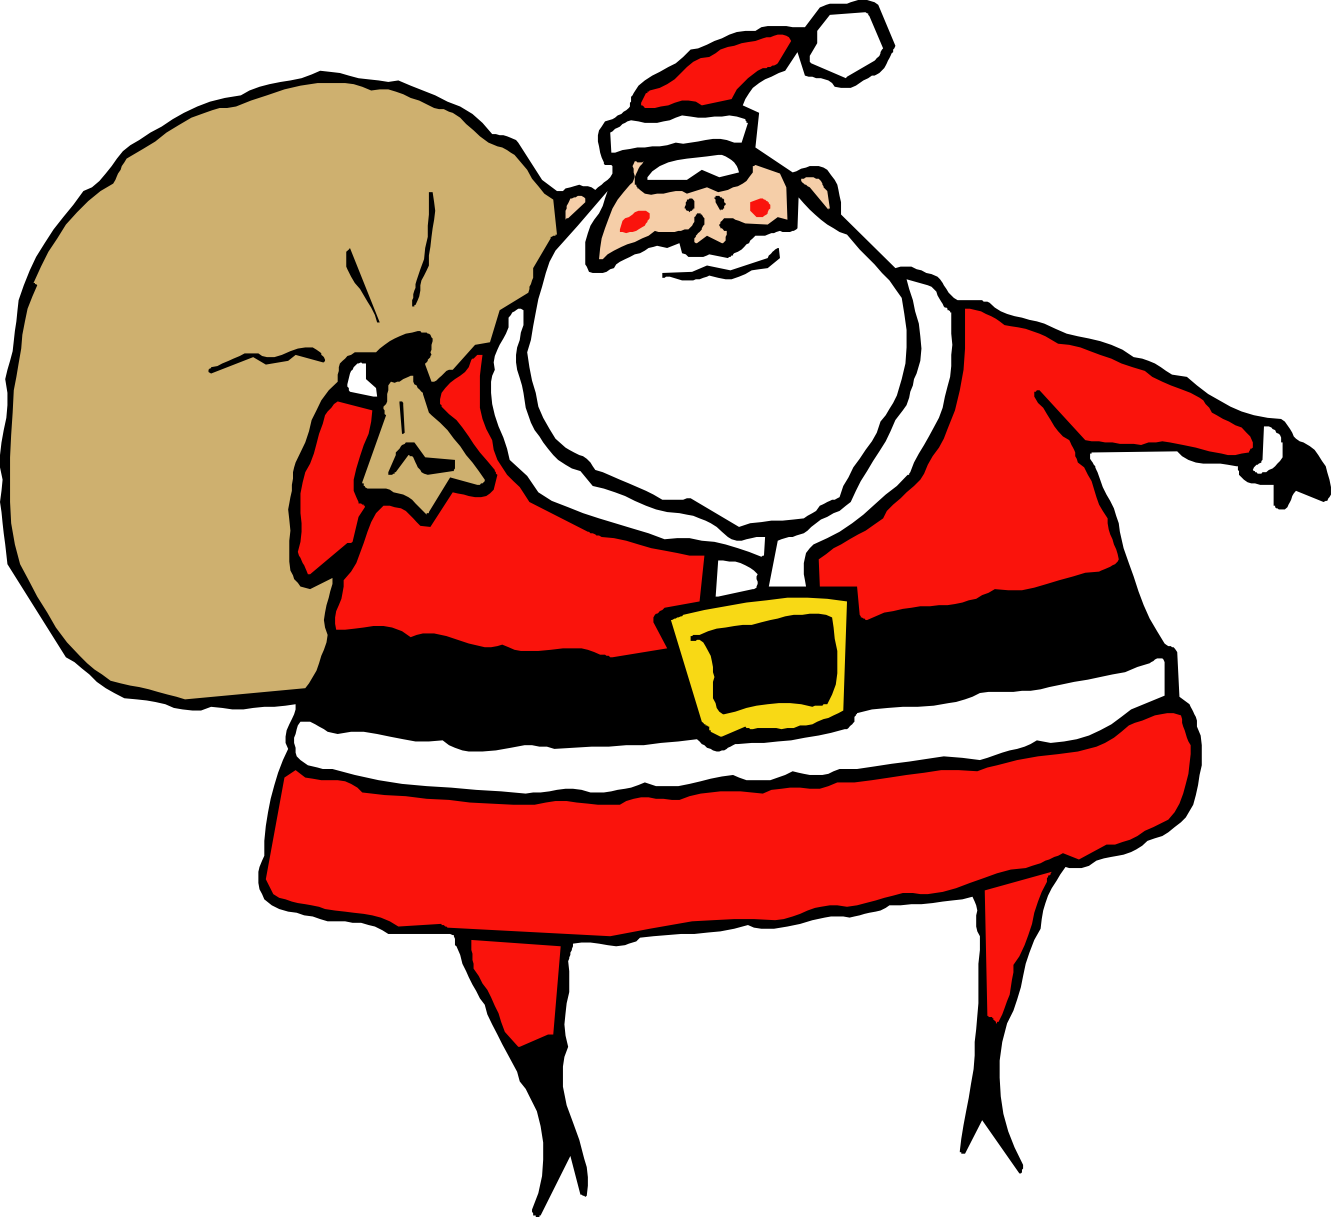 Clip Art Santa Clause - Clipart library